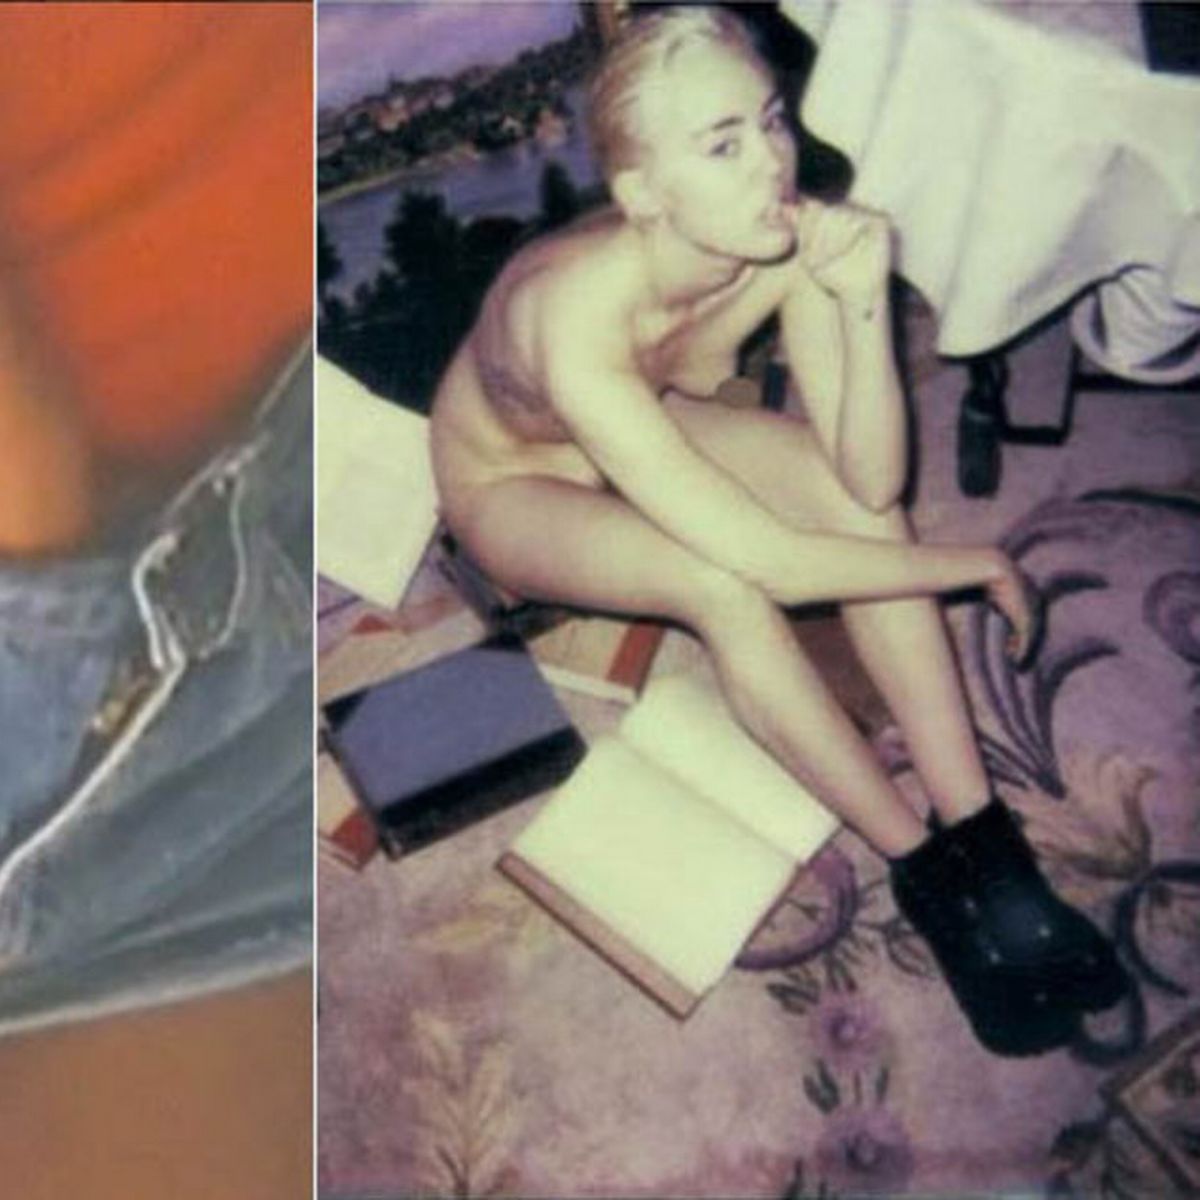 caroline briggs recommends Pics Of Miley Cyrus Having Sex